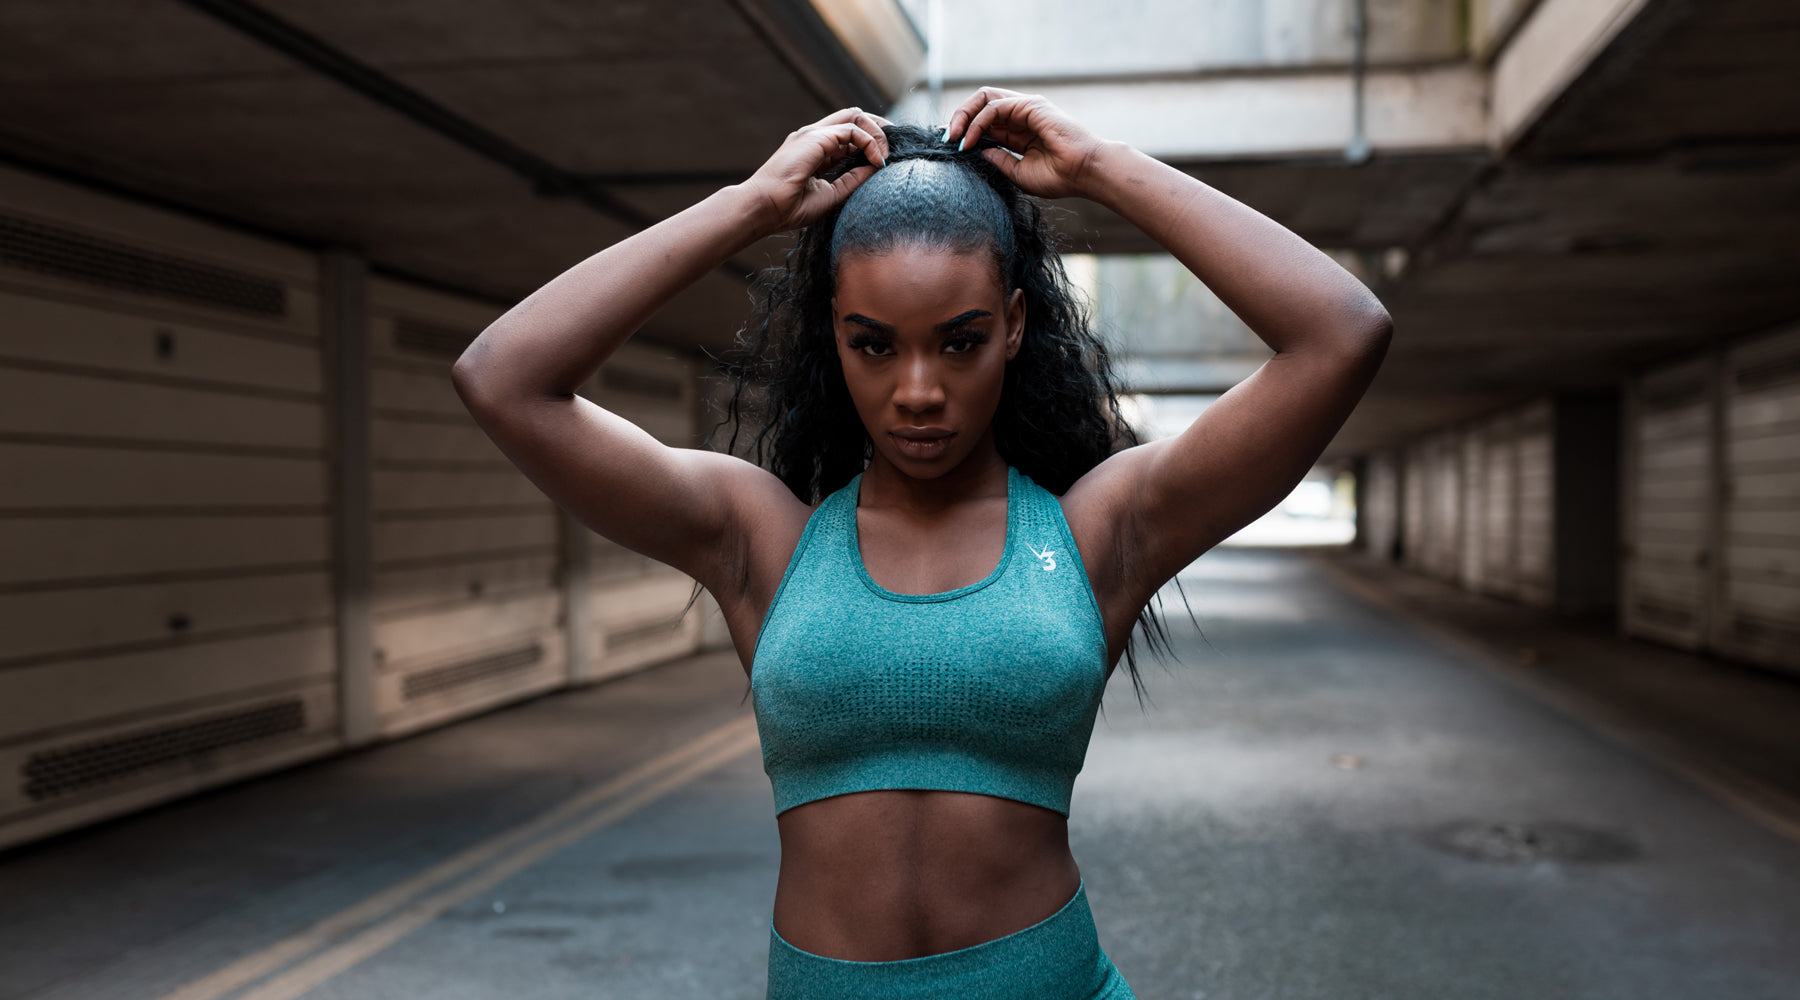 Activewear Wicking Sports Bra Light Impact for Women | Gym Aesthetics